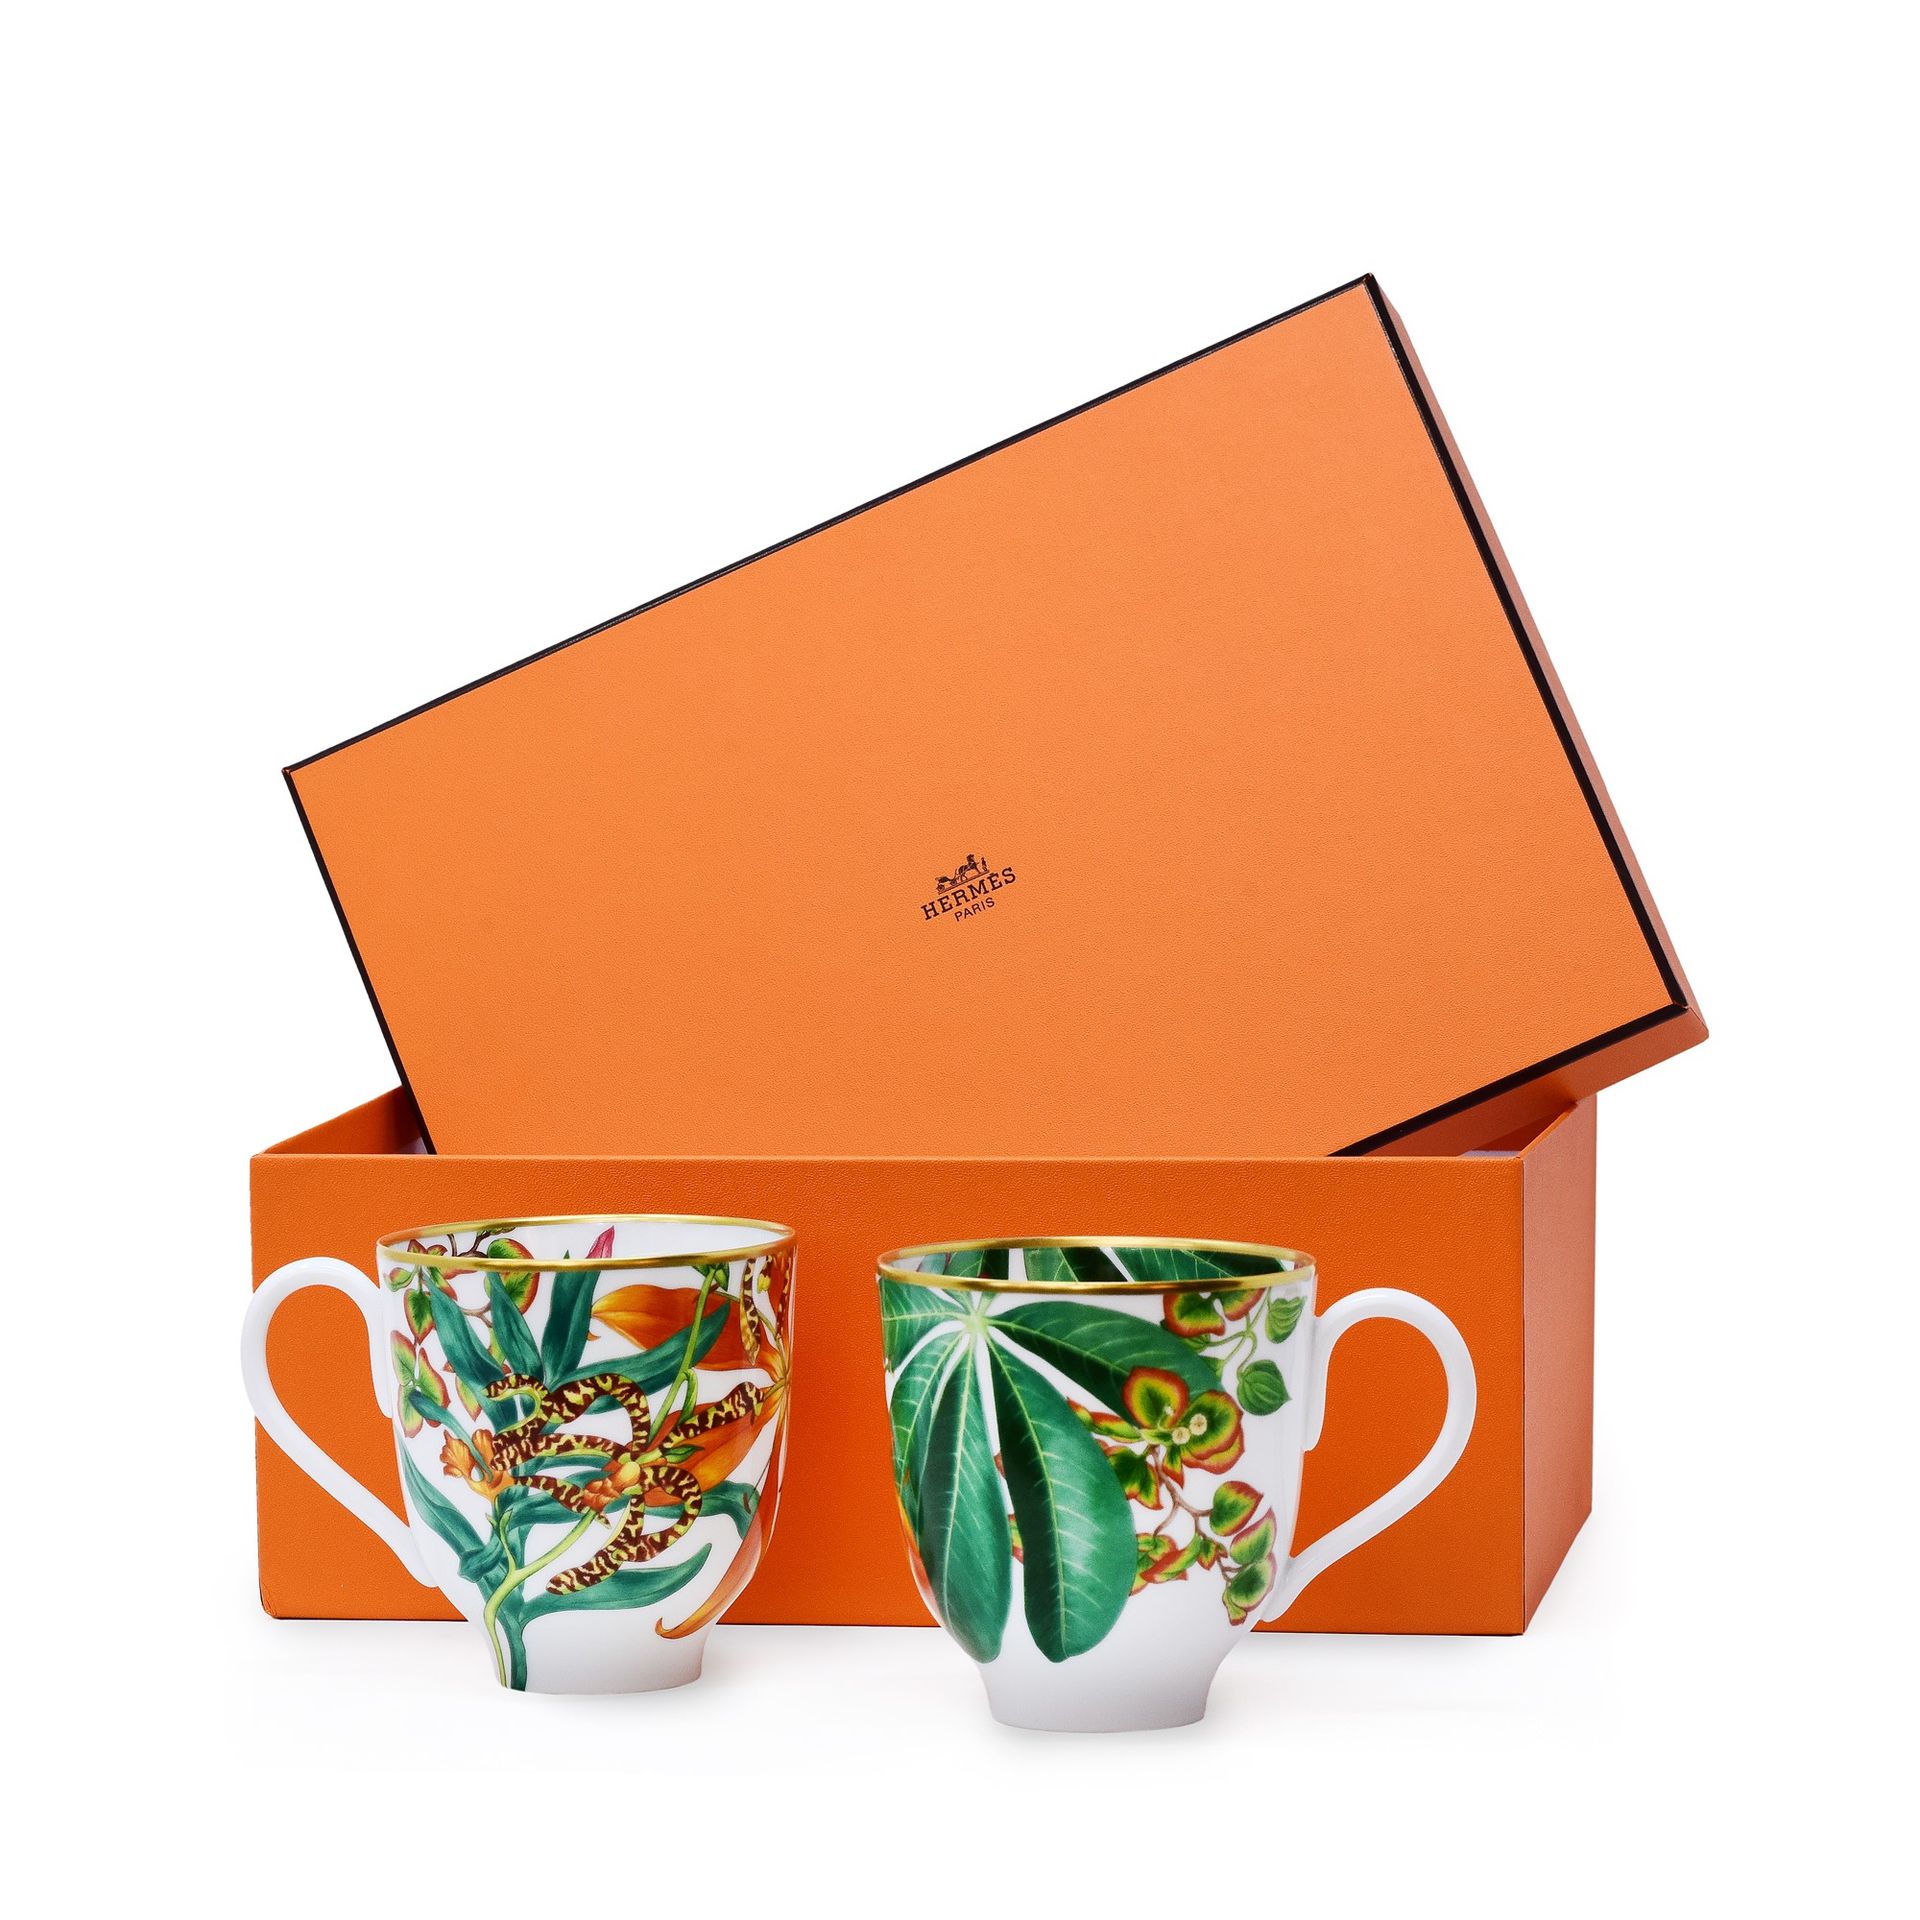 HERMES 一套两件利摩日Passifolia茶杯，署名Hemès。像新的一样。完整的盒子和原始丝带。

内径9.5厘米-高10.5厘米

 





 
&hellip;